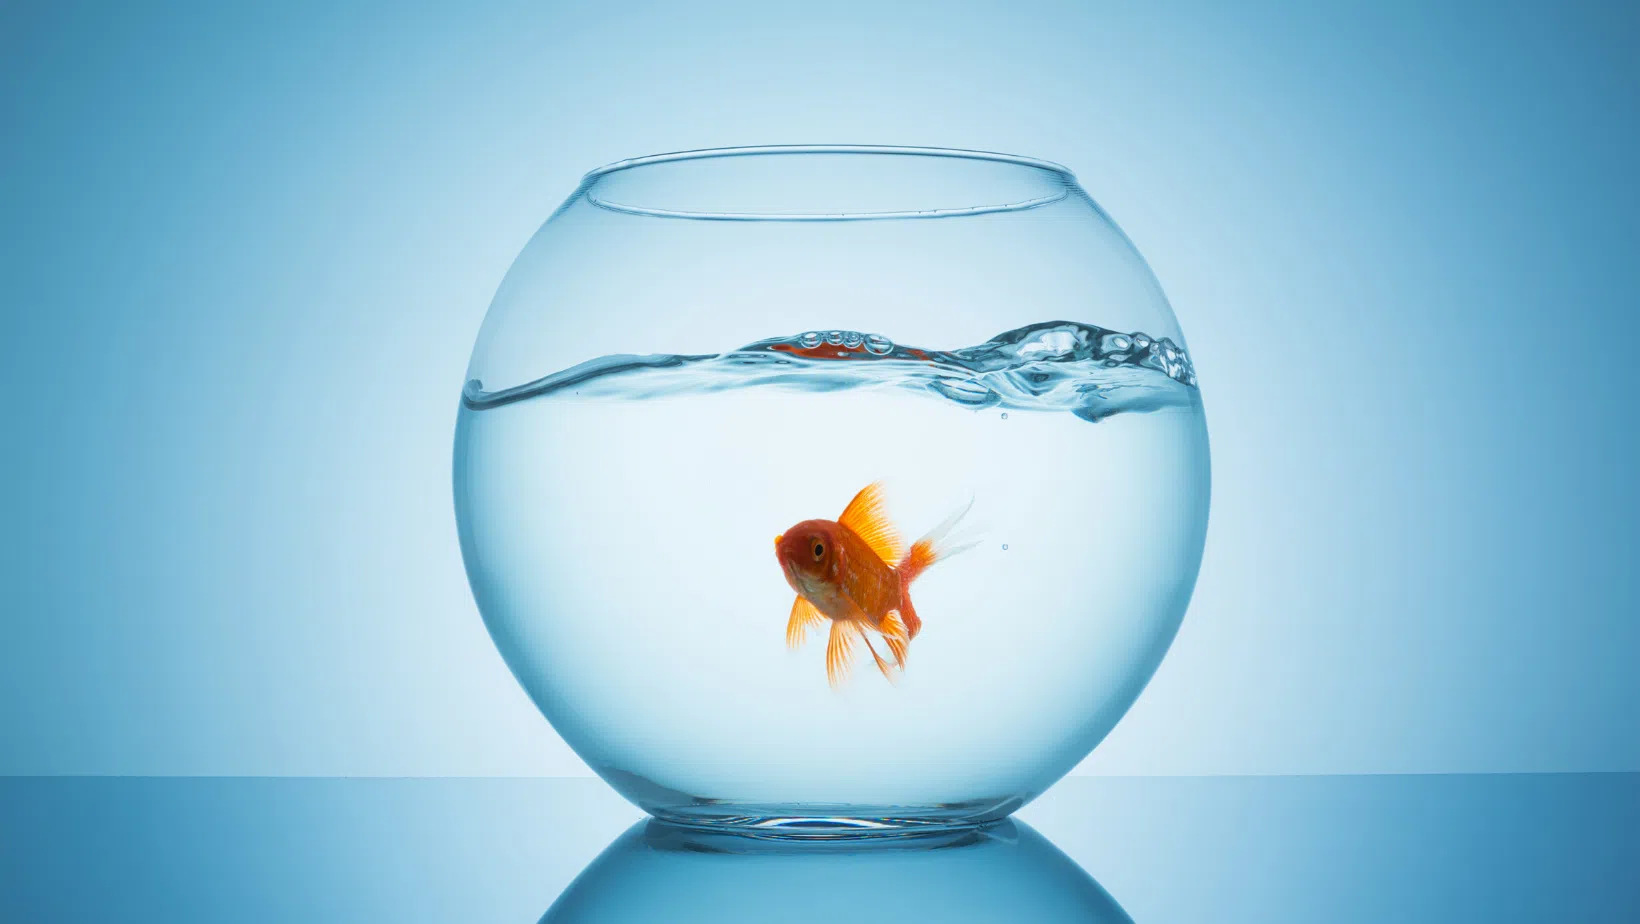 Think Twice Before You Flush That Goldfish!